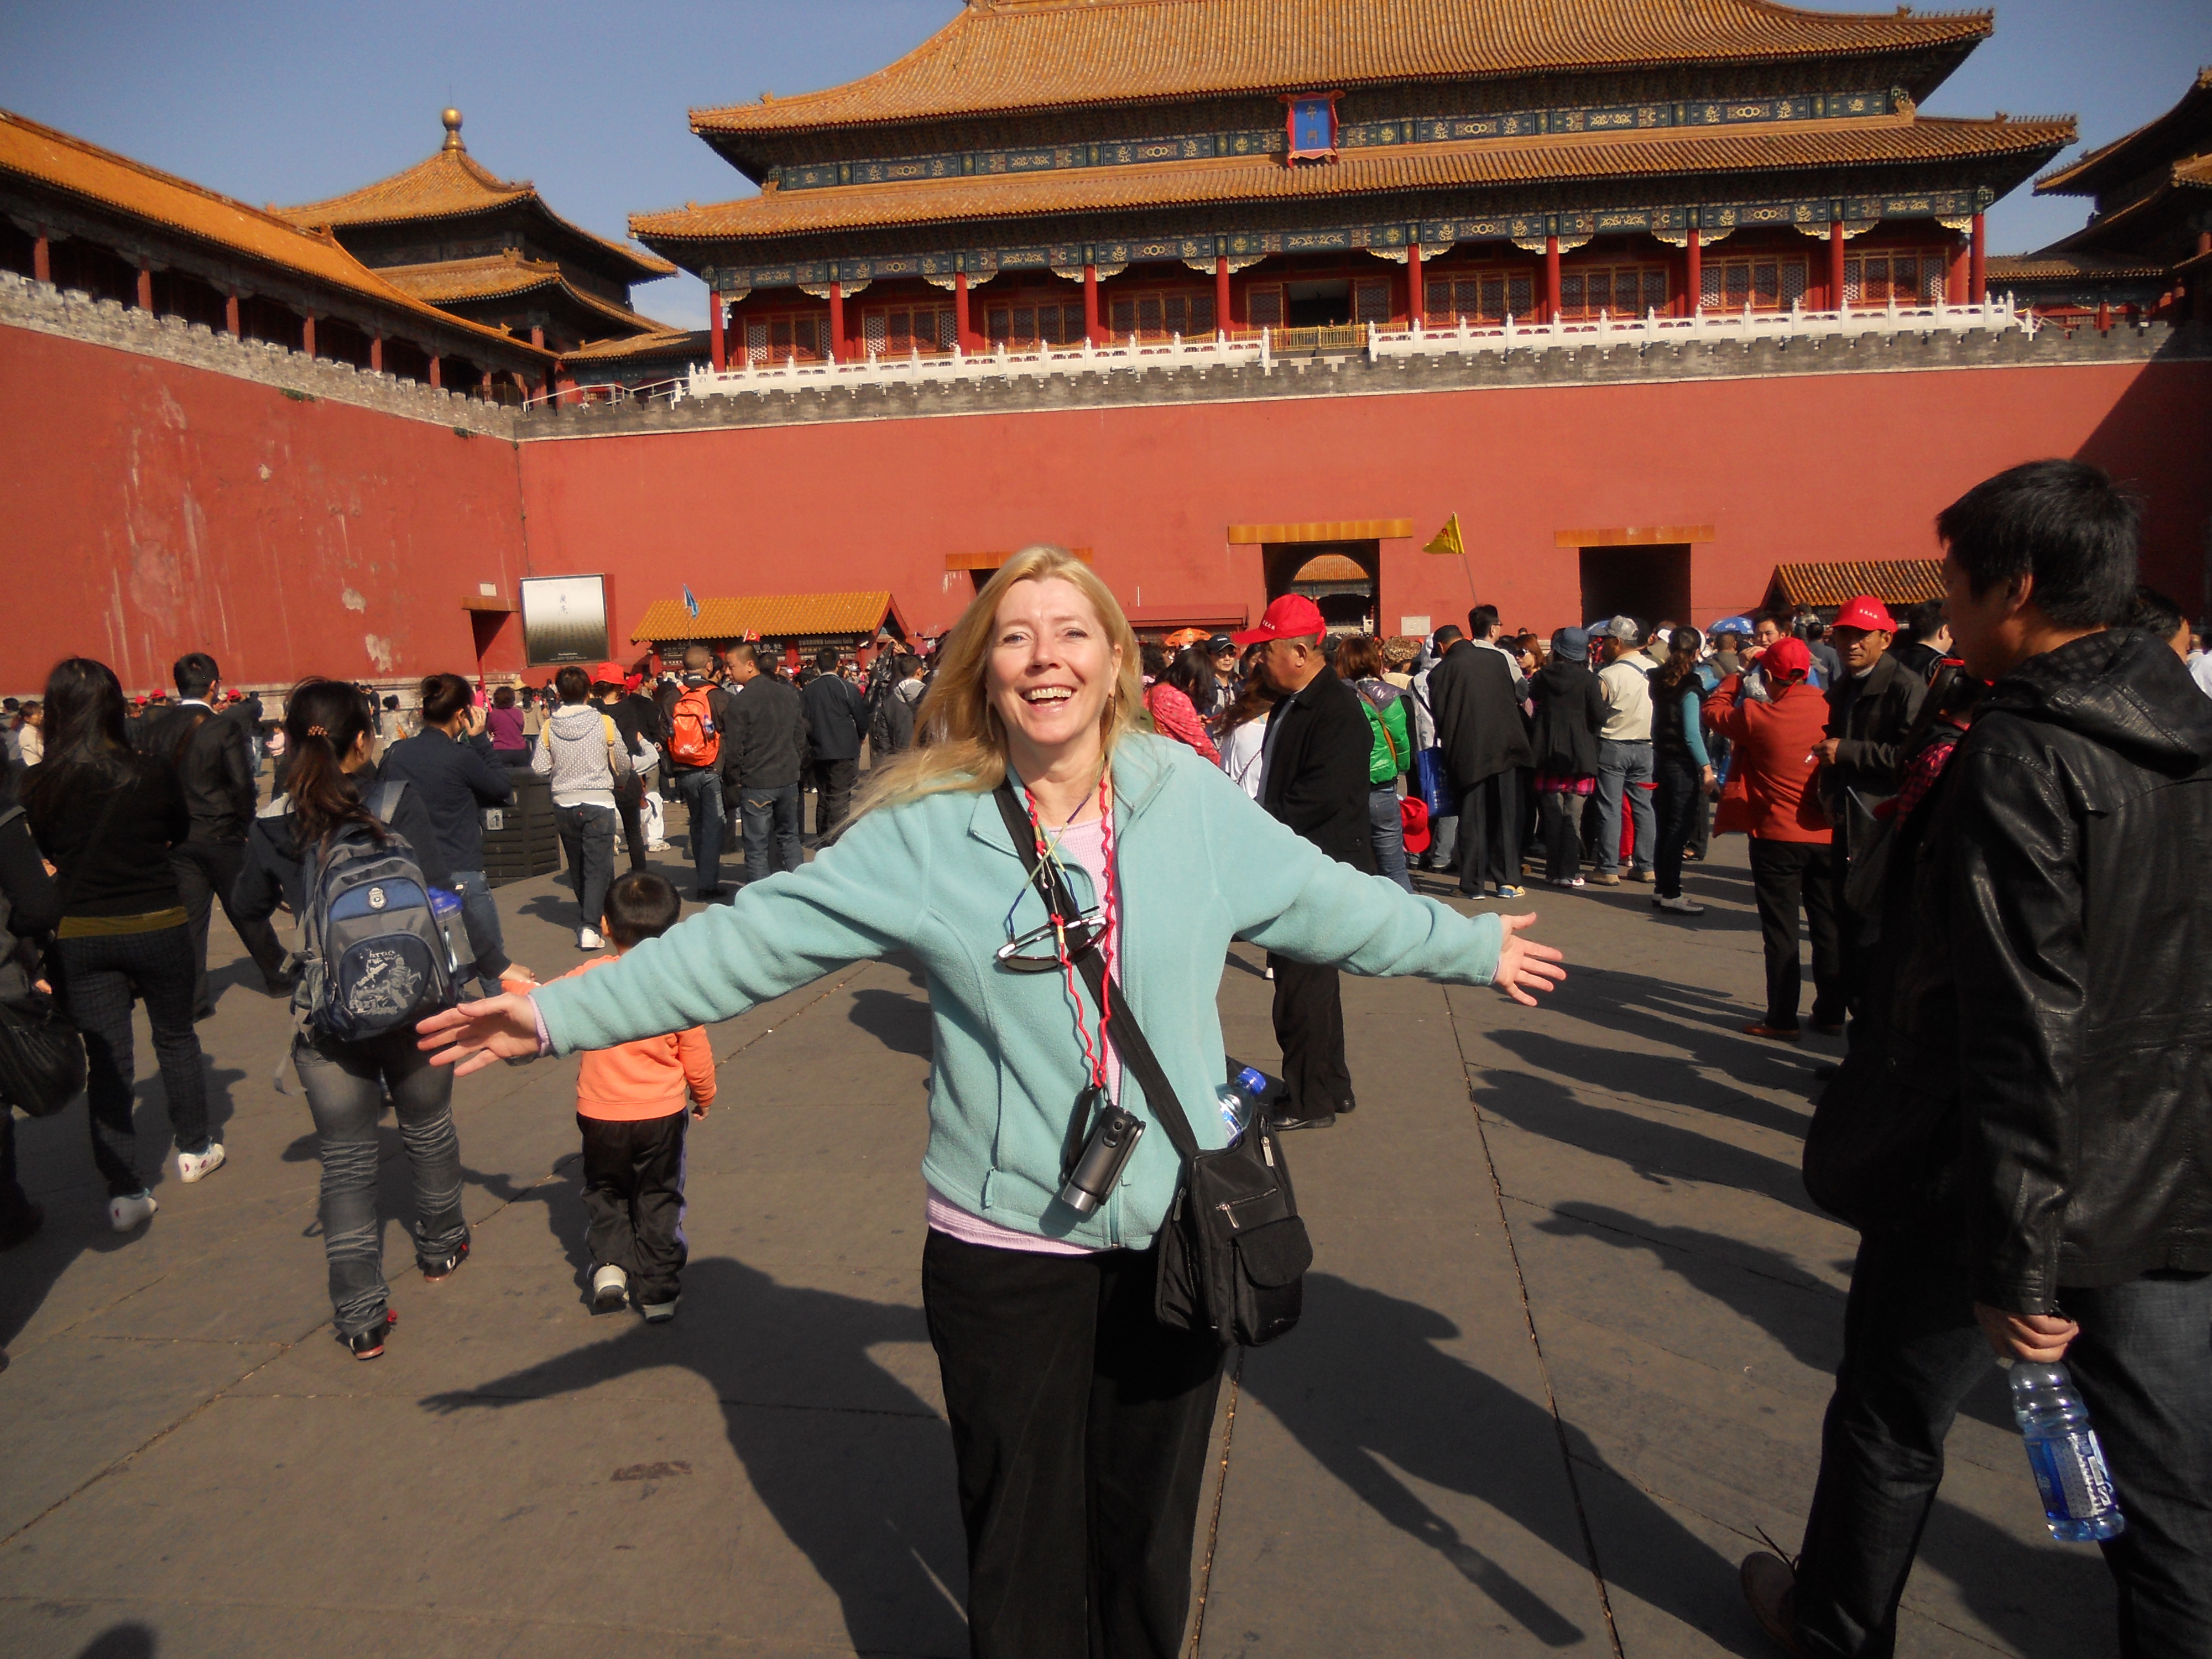 Diana in Forbidden City, Beijing, China